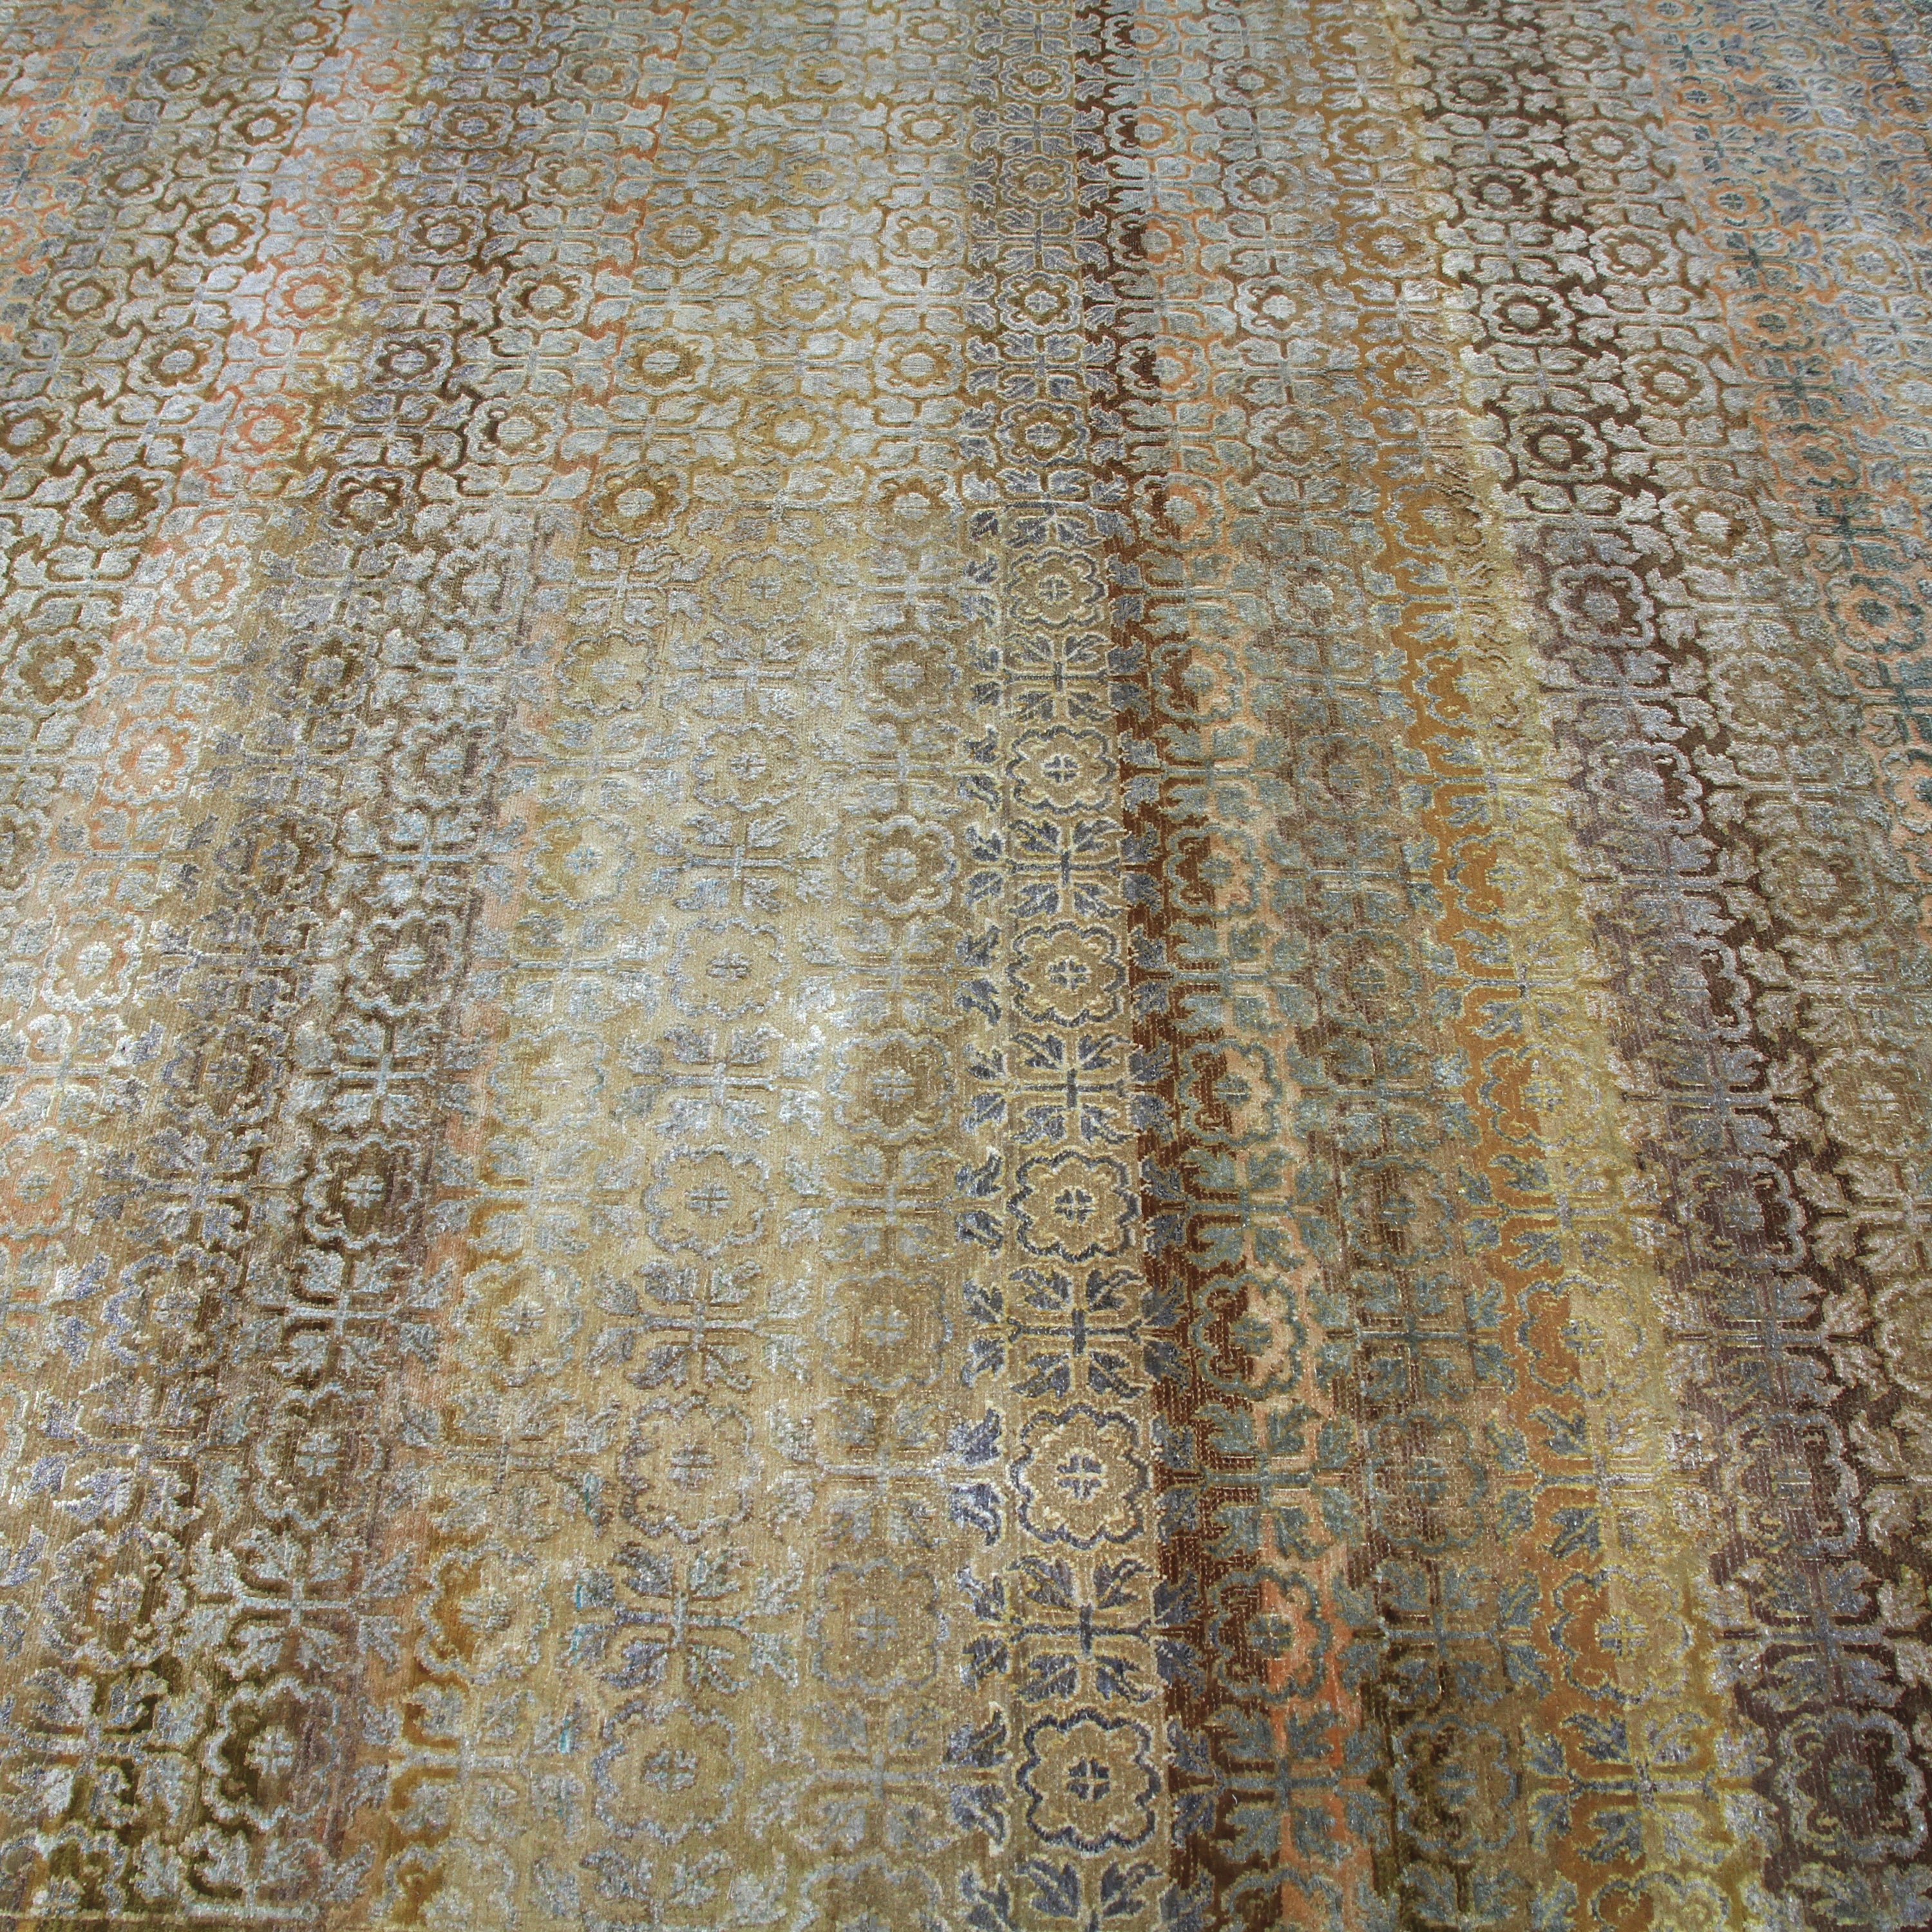 Tan and Brown Alchemy Silk & Wool Rug - 7'10" x 10'2"